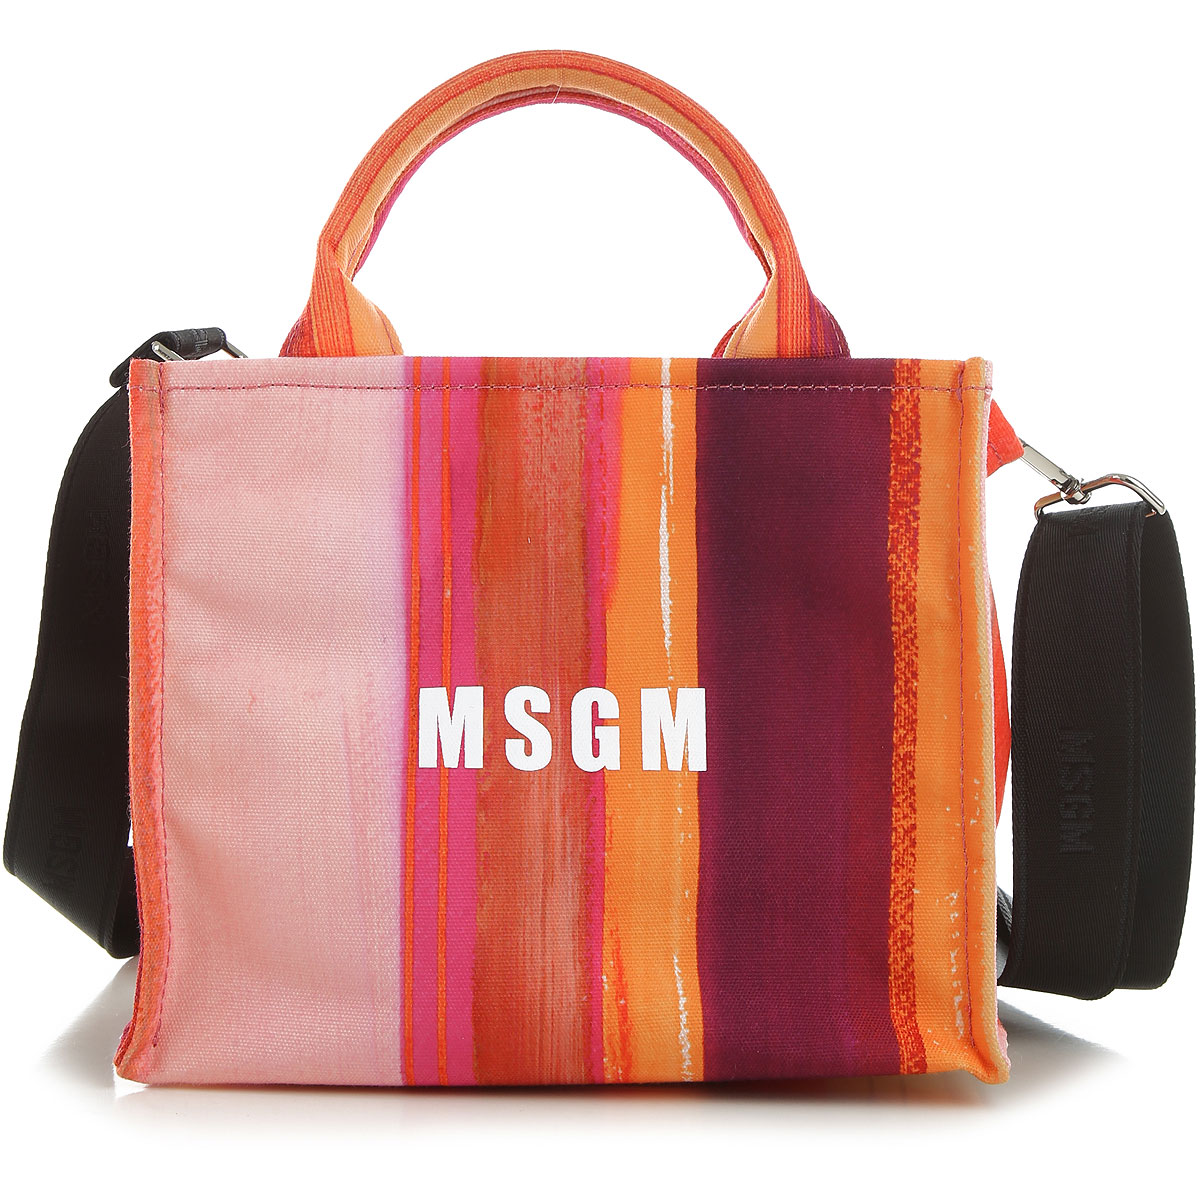 Welcome spring 🌸🌼🍀. MARSHMALLOW Sweet colorful Marshmallow PM handbag .  @moda_mall #mlvbh_bags…